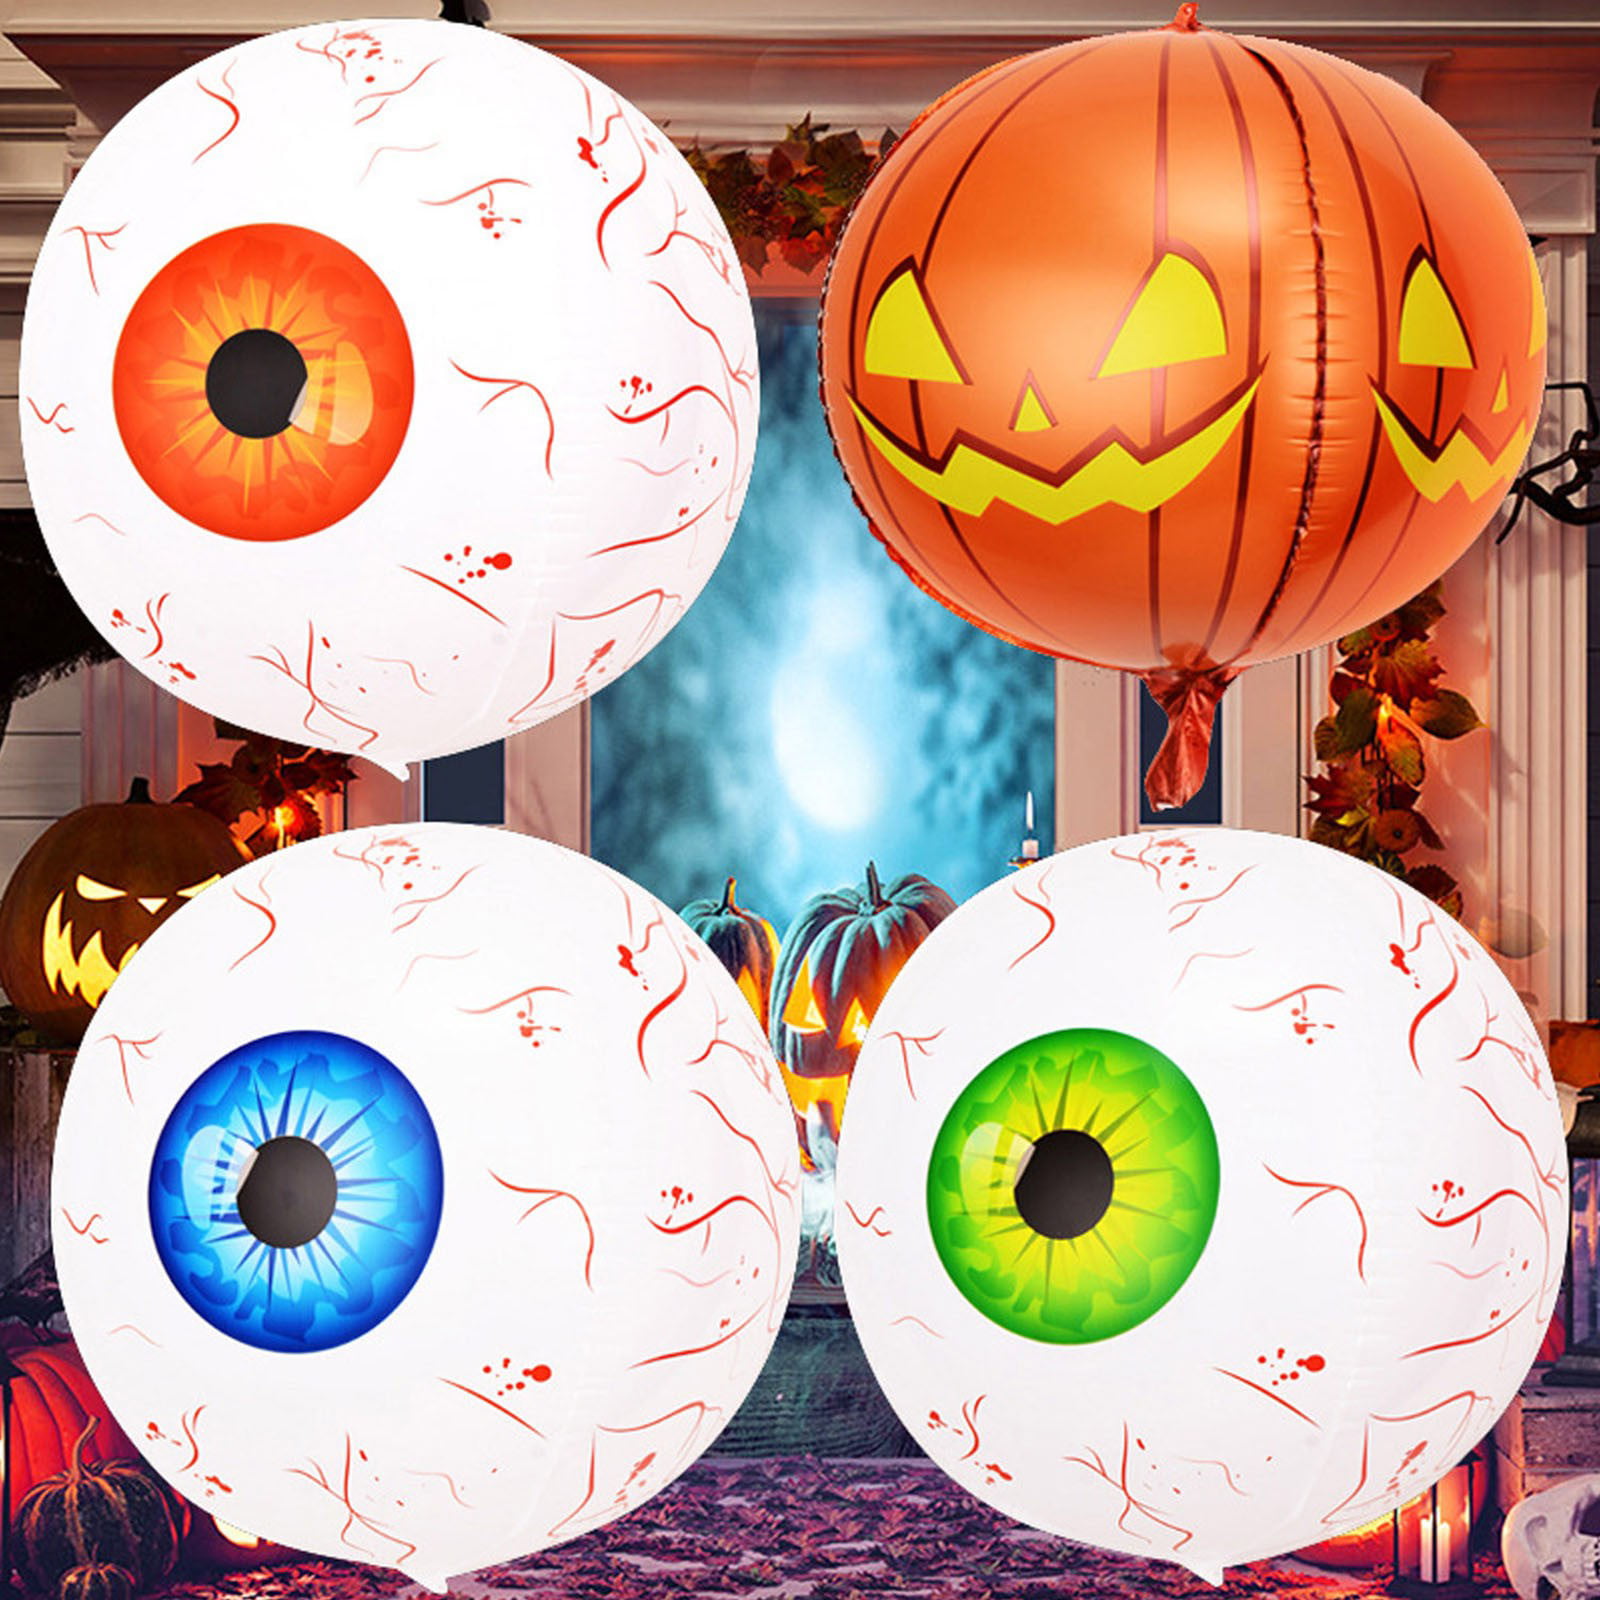 How to Make Halloween Eyeball Treats - YouTube